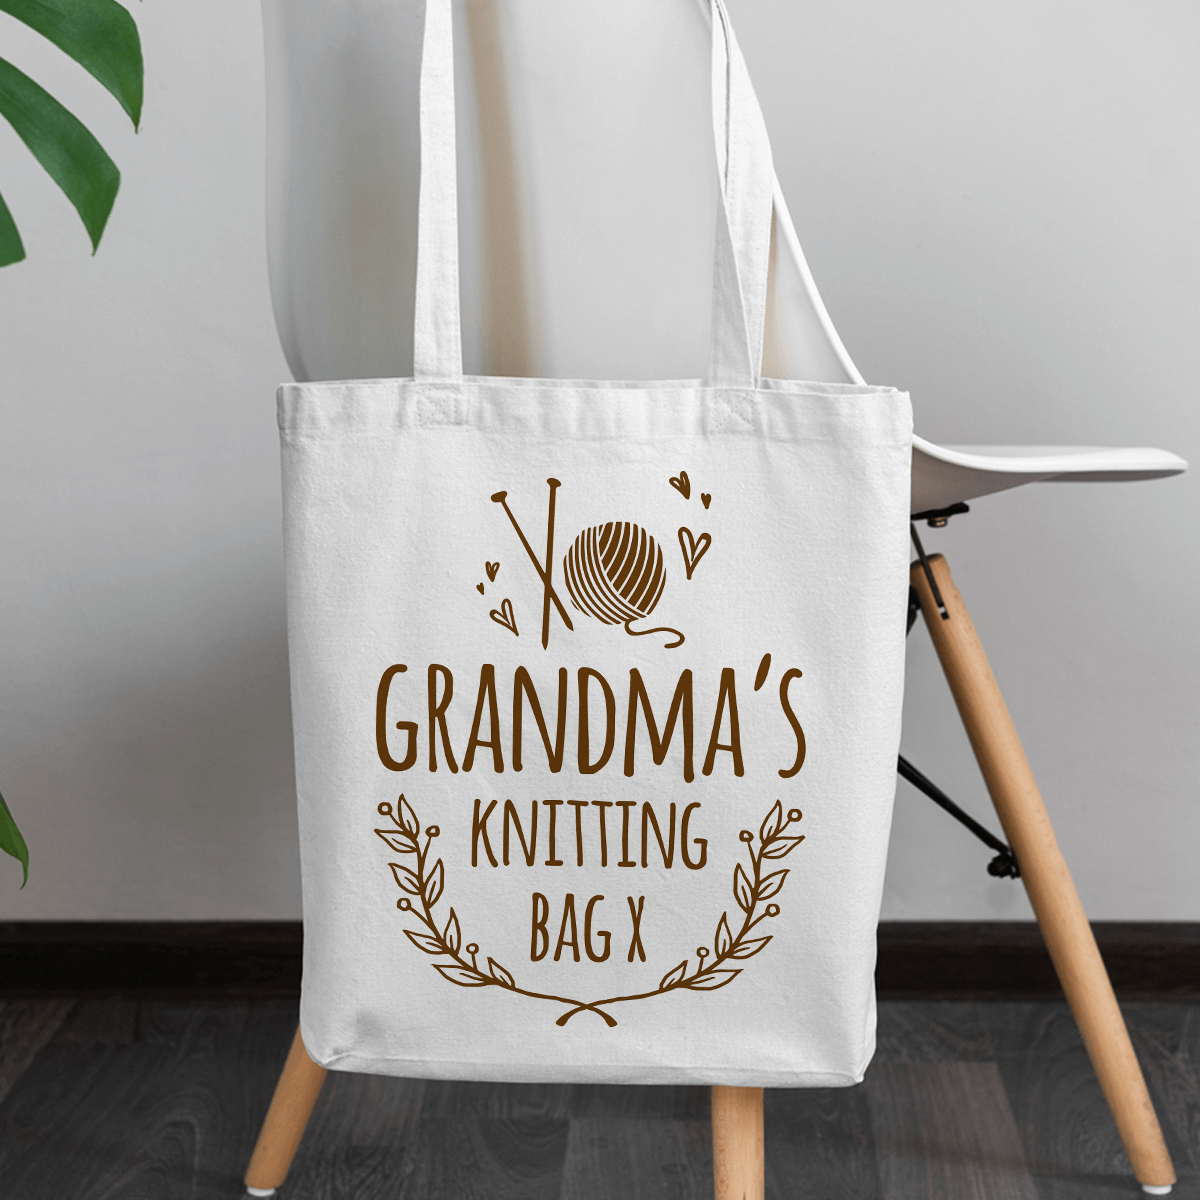 Personalised Tote Bag Canvas Bag Knitting/Wool Gift, Cotton Bag Shopping Bag 